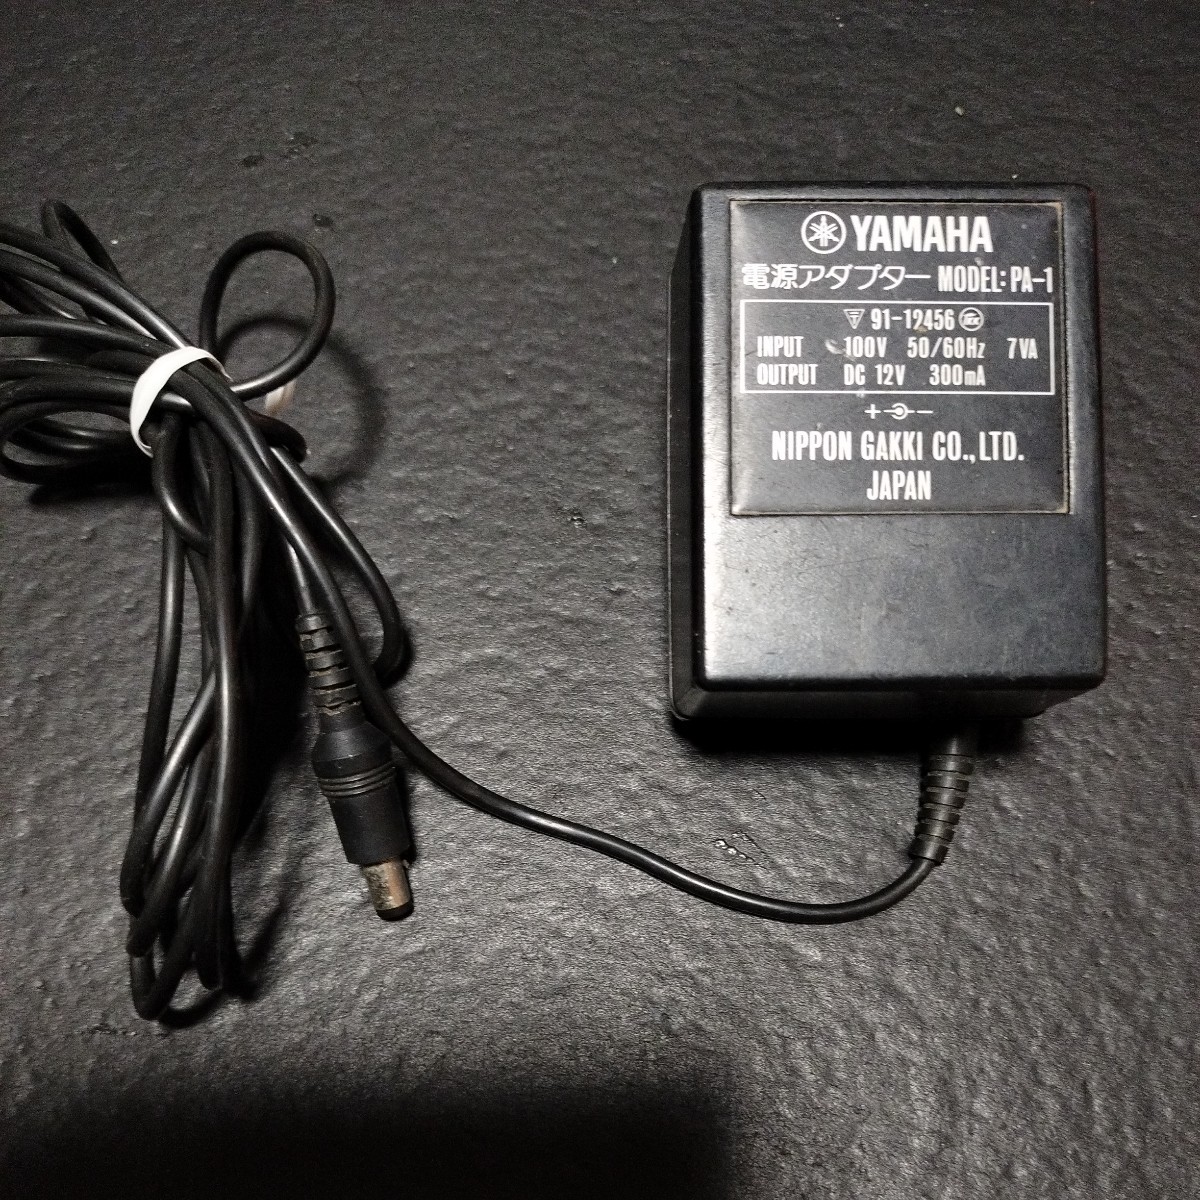 YAMAHA Yamaha оригинальный AC адаптор PA1 DC12V 300mA